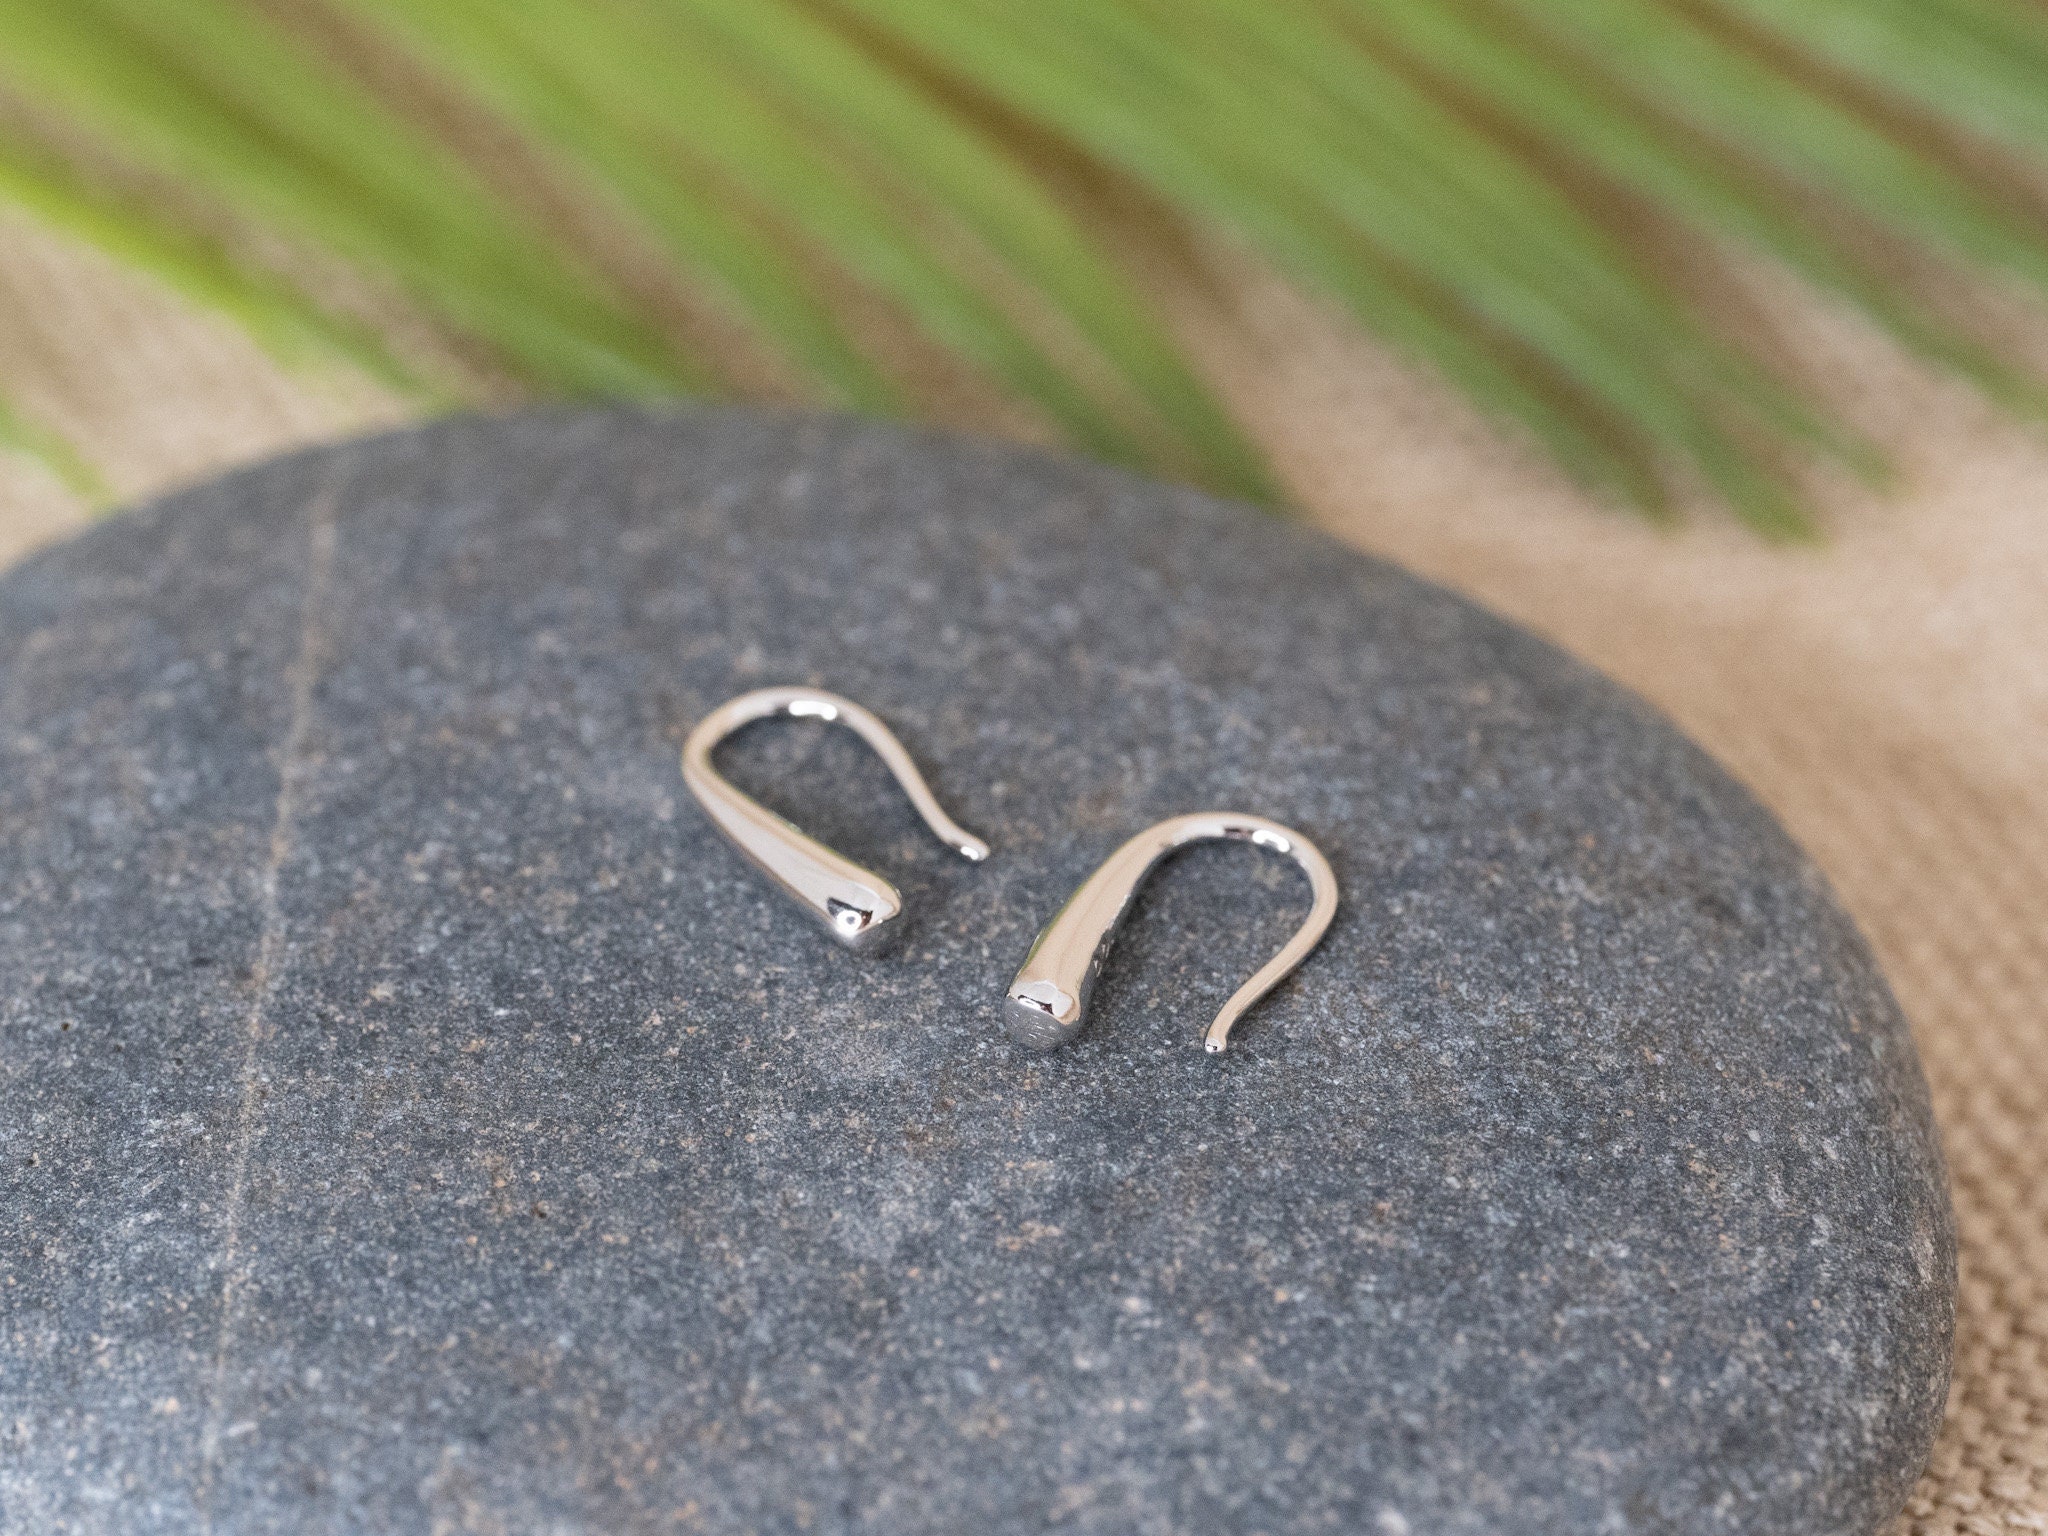 French Hook Earrings Stainless Steel 43391 (144), Fish Hook Earrings,  Stainless Steel Ear Wires, Earring Components, Ball Coil Earrings